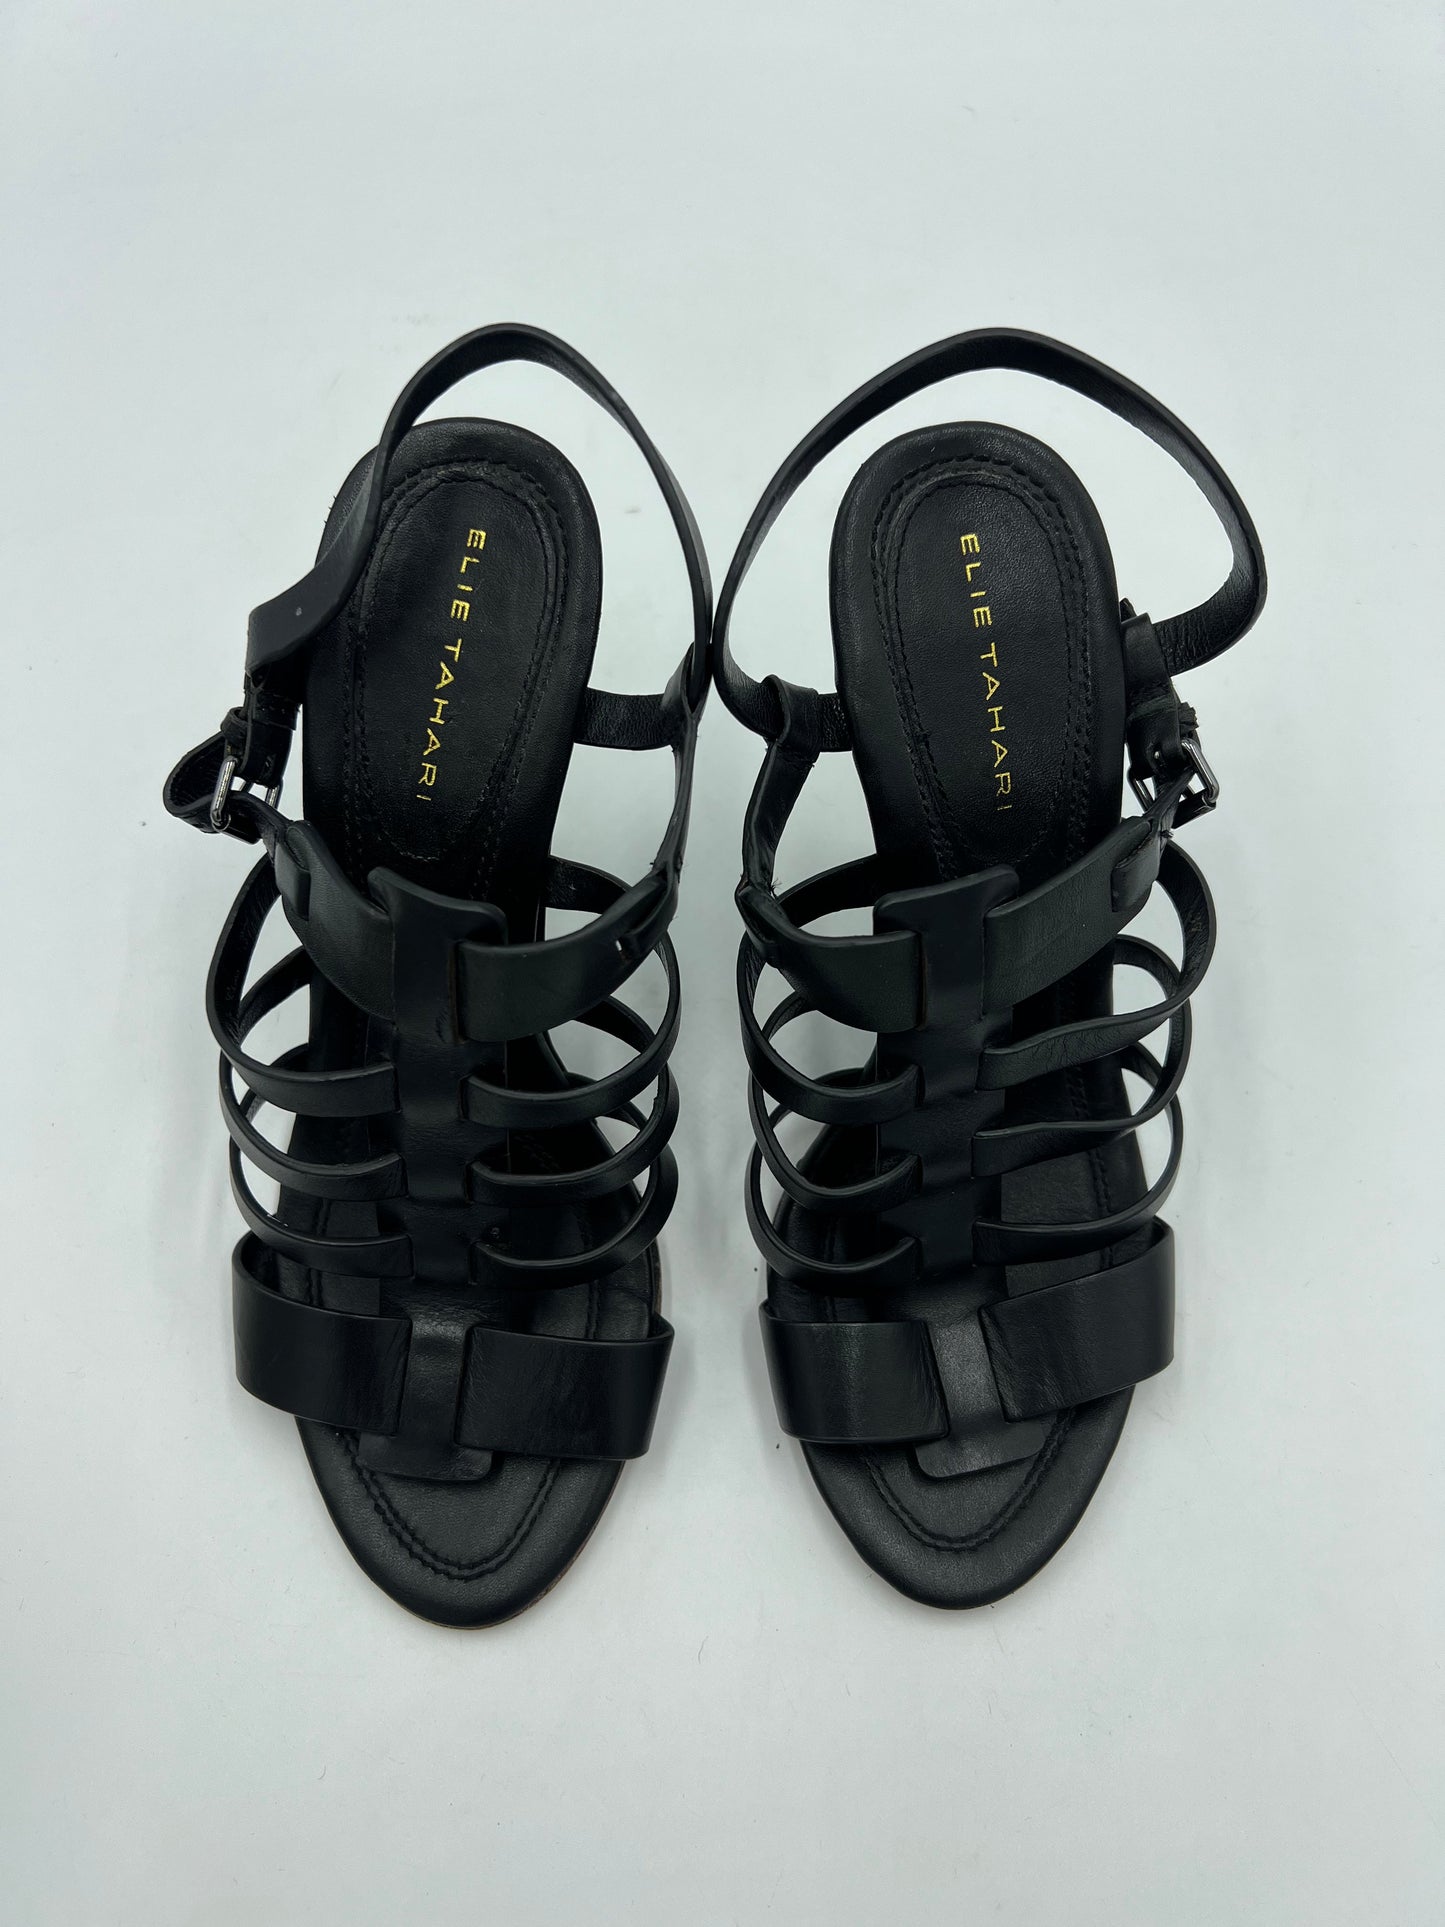 Shoes Heels Stiletto By Elie Tahari  Size: 6.5